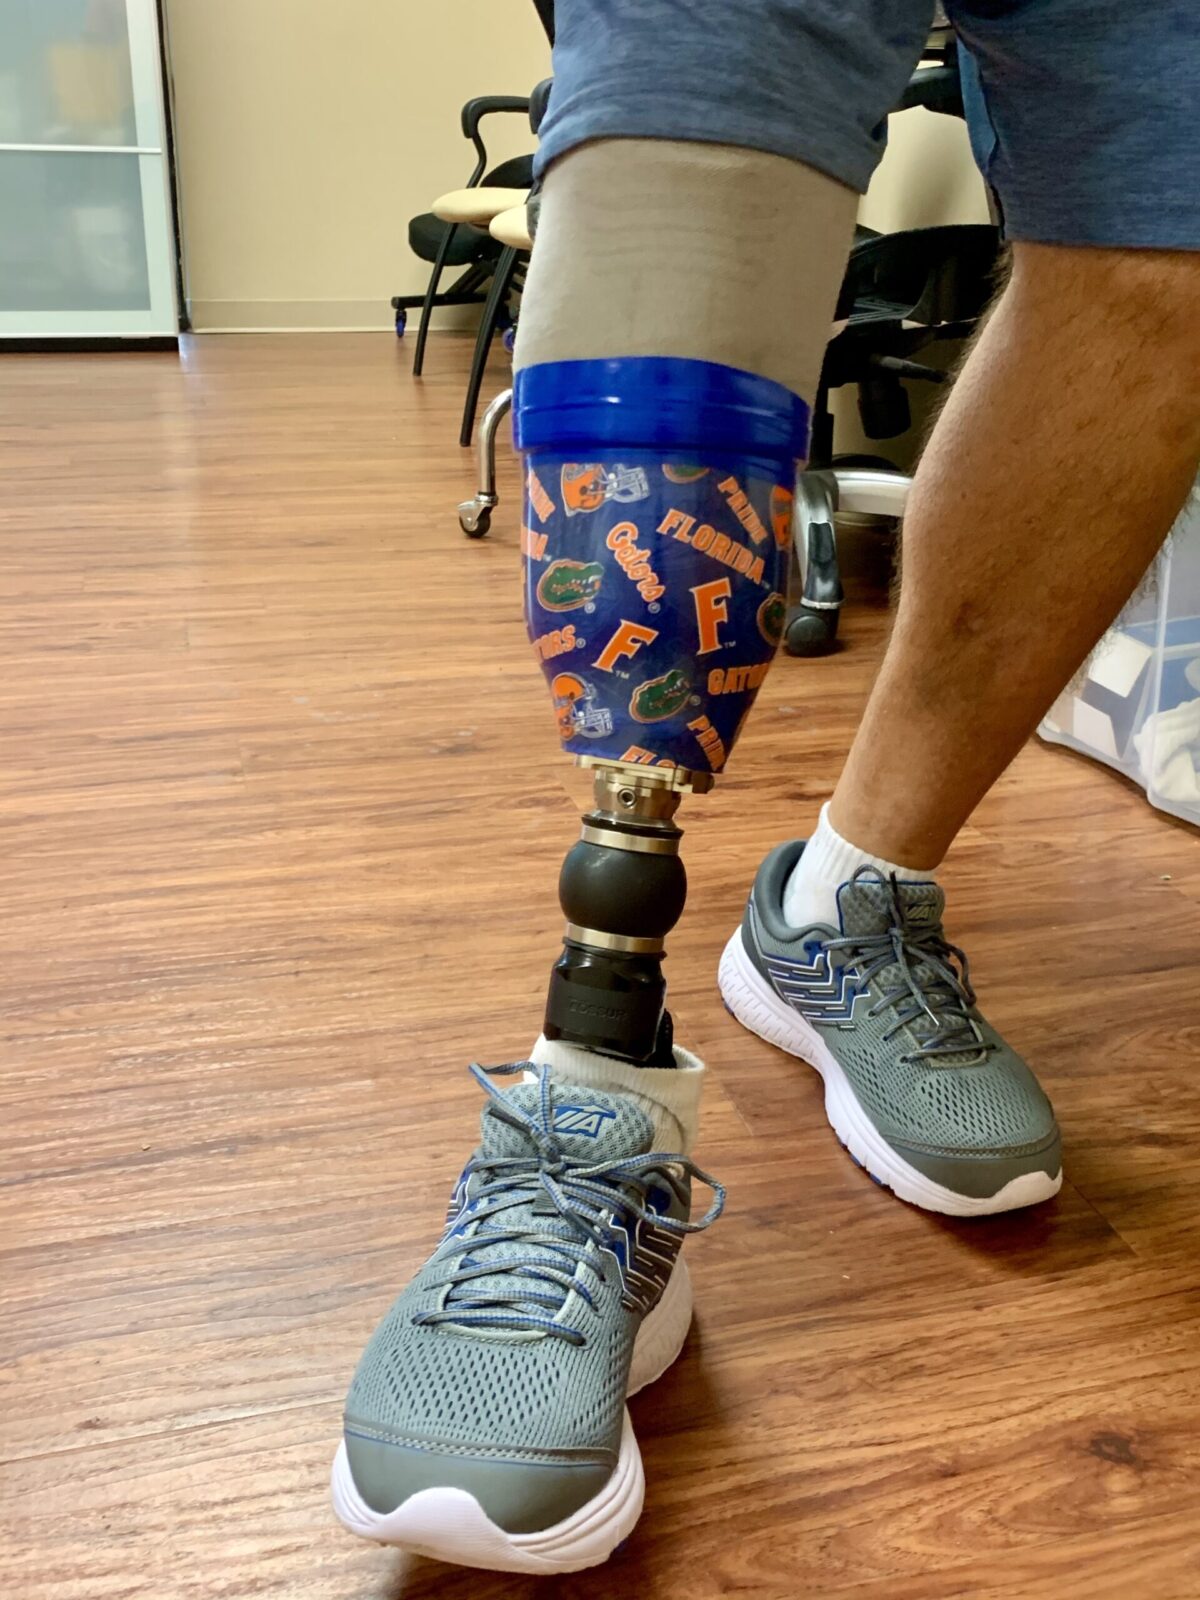 Below knee prosthetic leg with Ossur pro-flex xc torsion foot